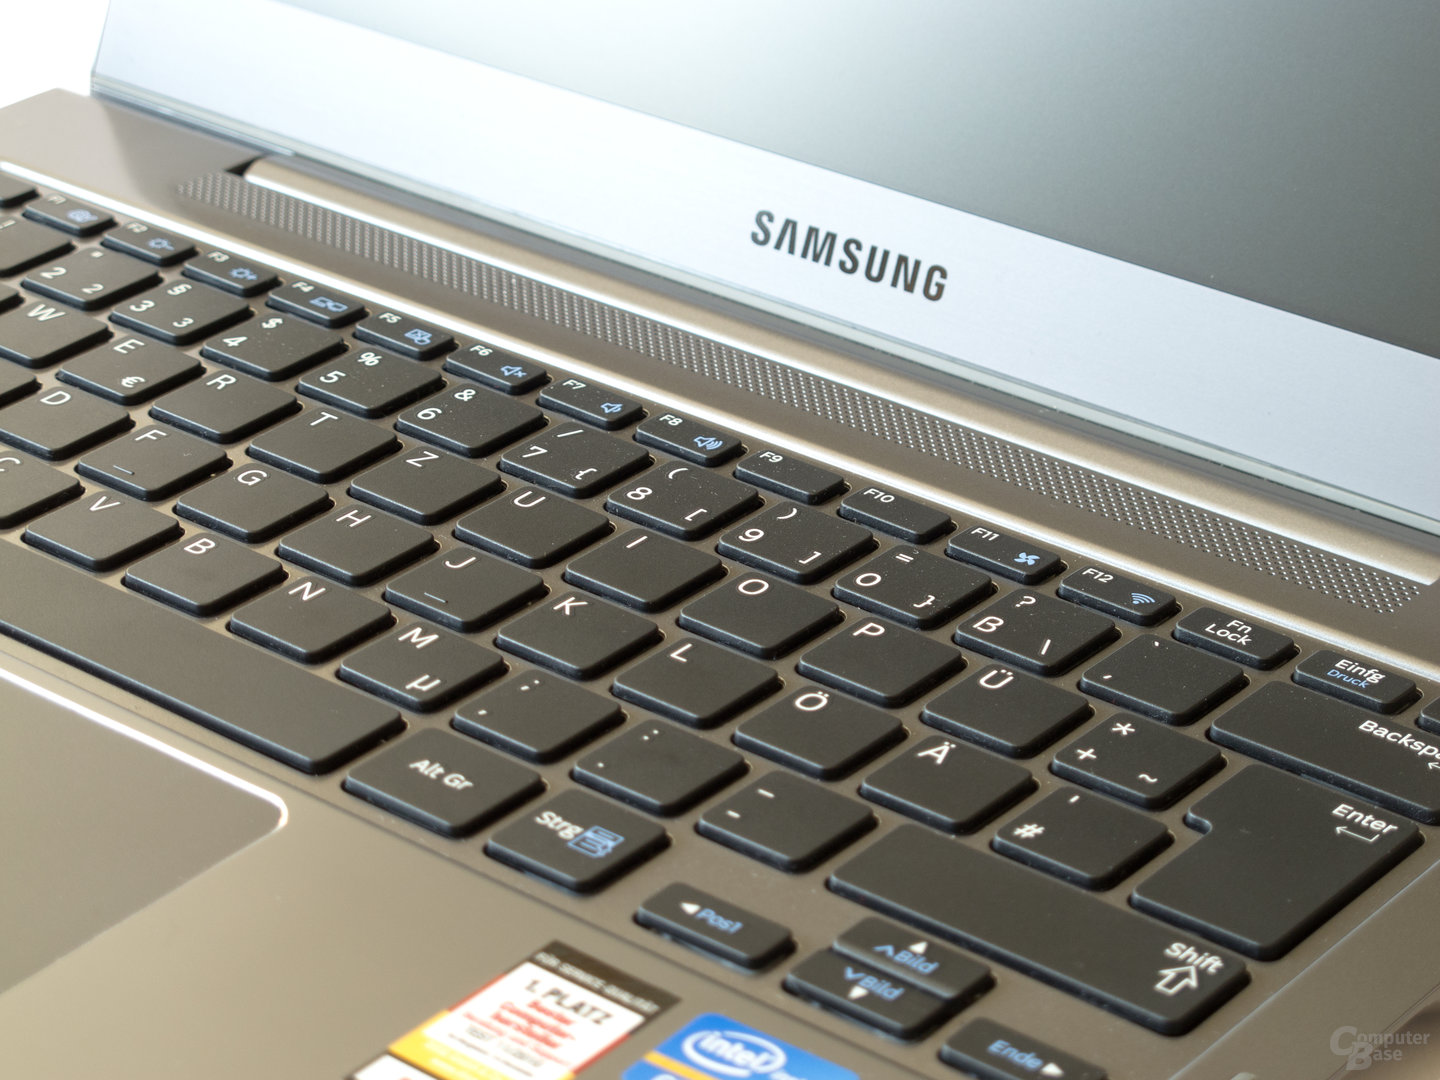 Samsung 530U3B: Tastatur